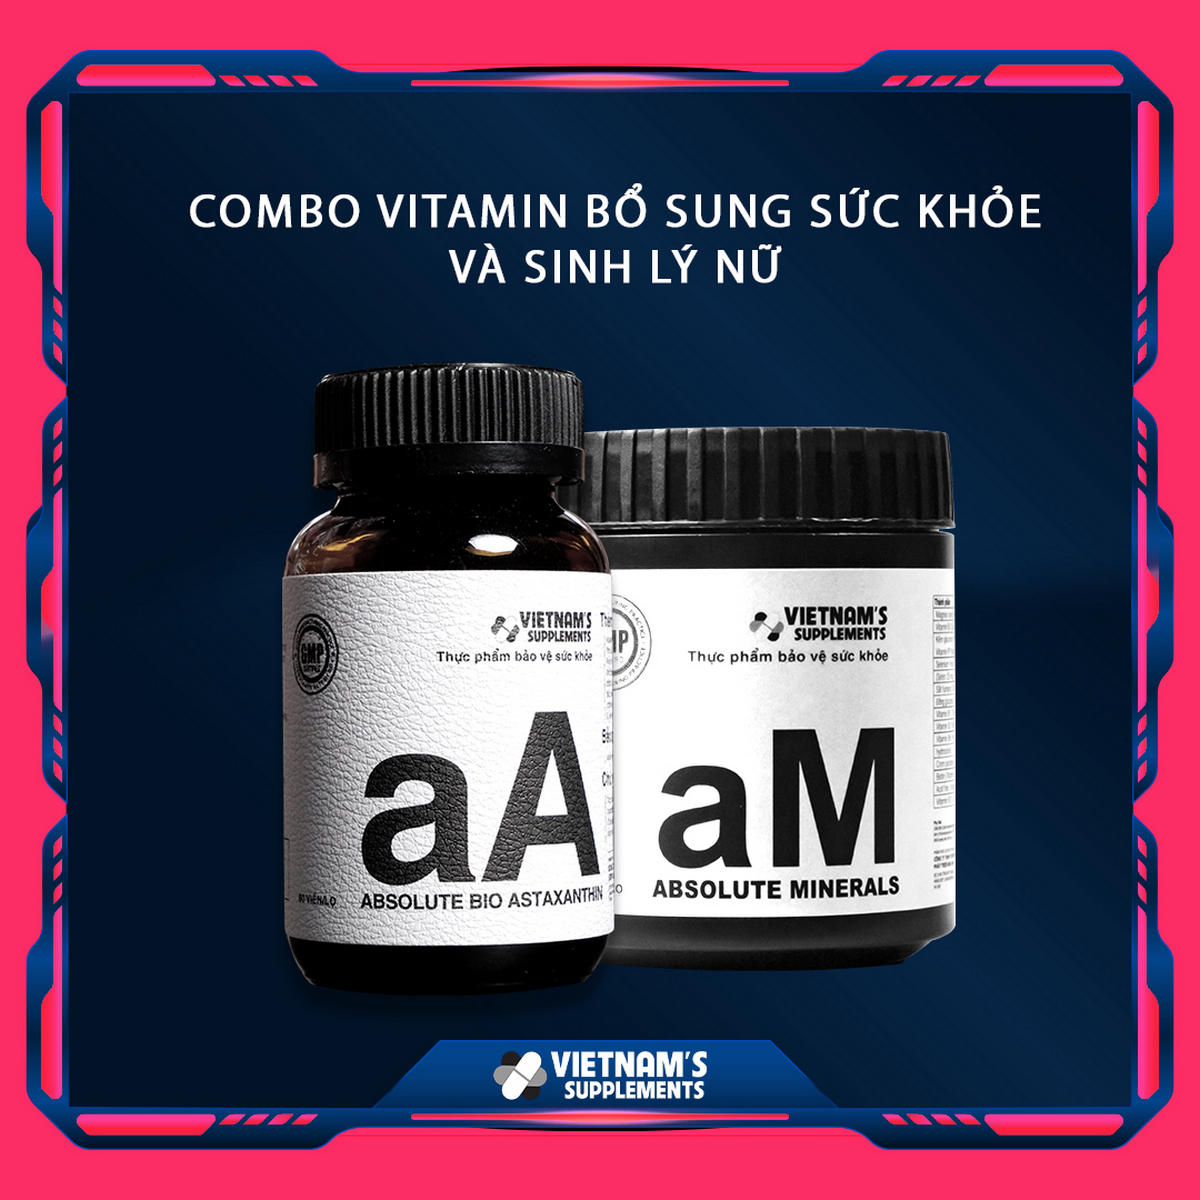 Combo Vitamin Bổ Sung SK Và Sinh Lý Nữ Absolute Minerals + Absolute Bio Astaxanthin - Vietnams Supplements